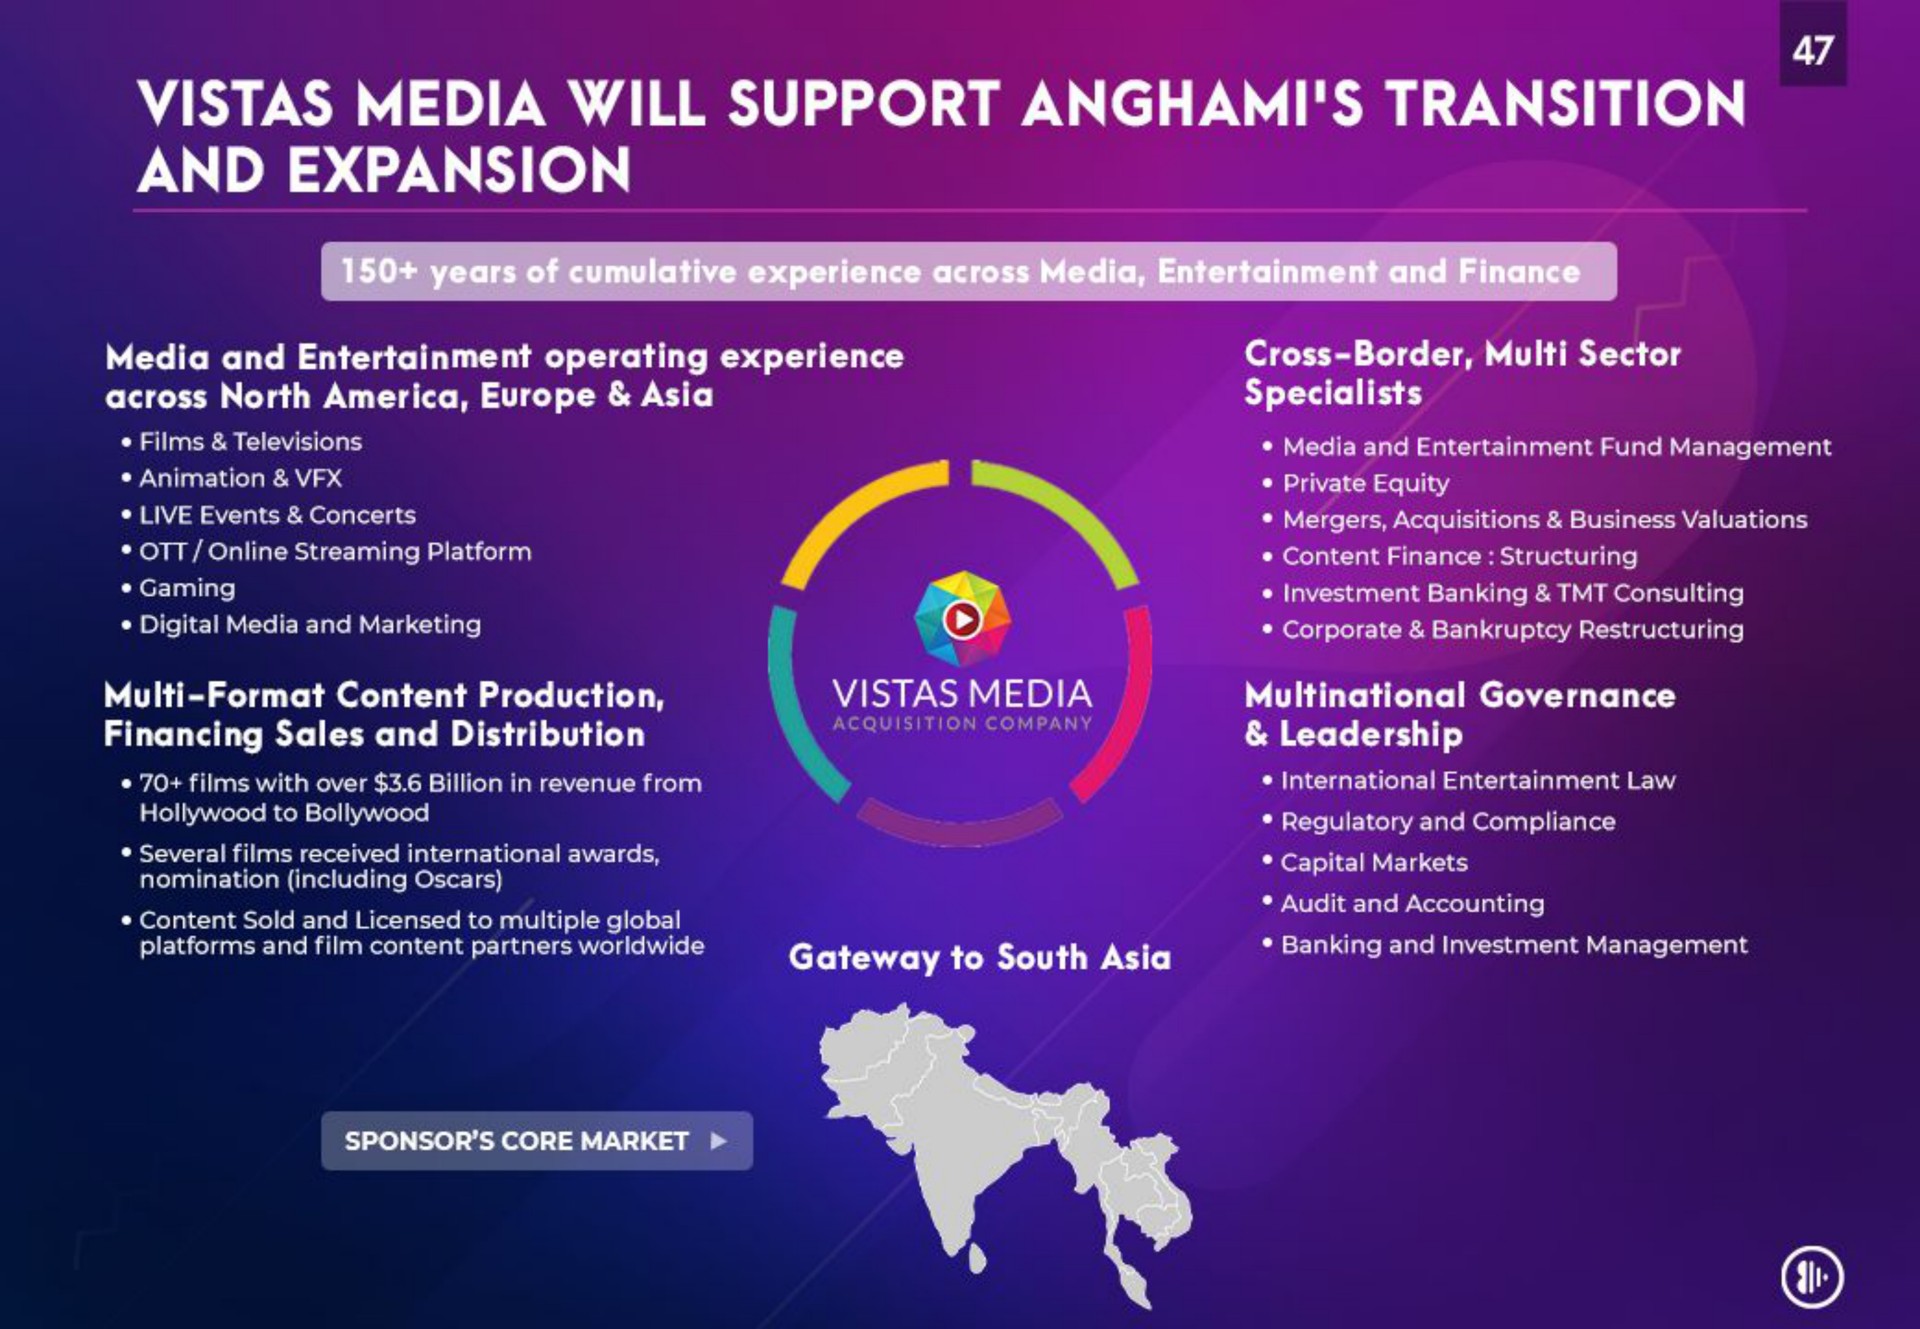 vistas media will support transition and expansion | Anghami